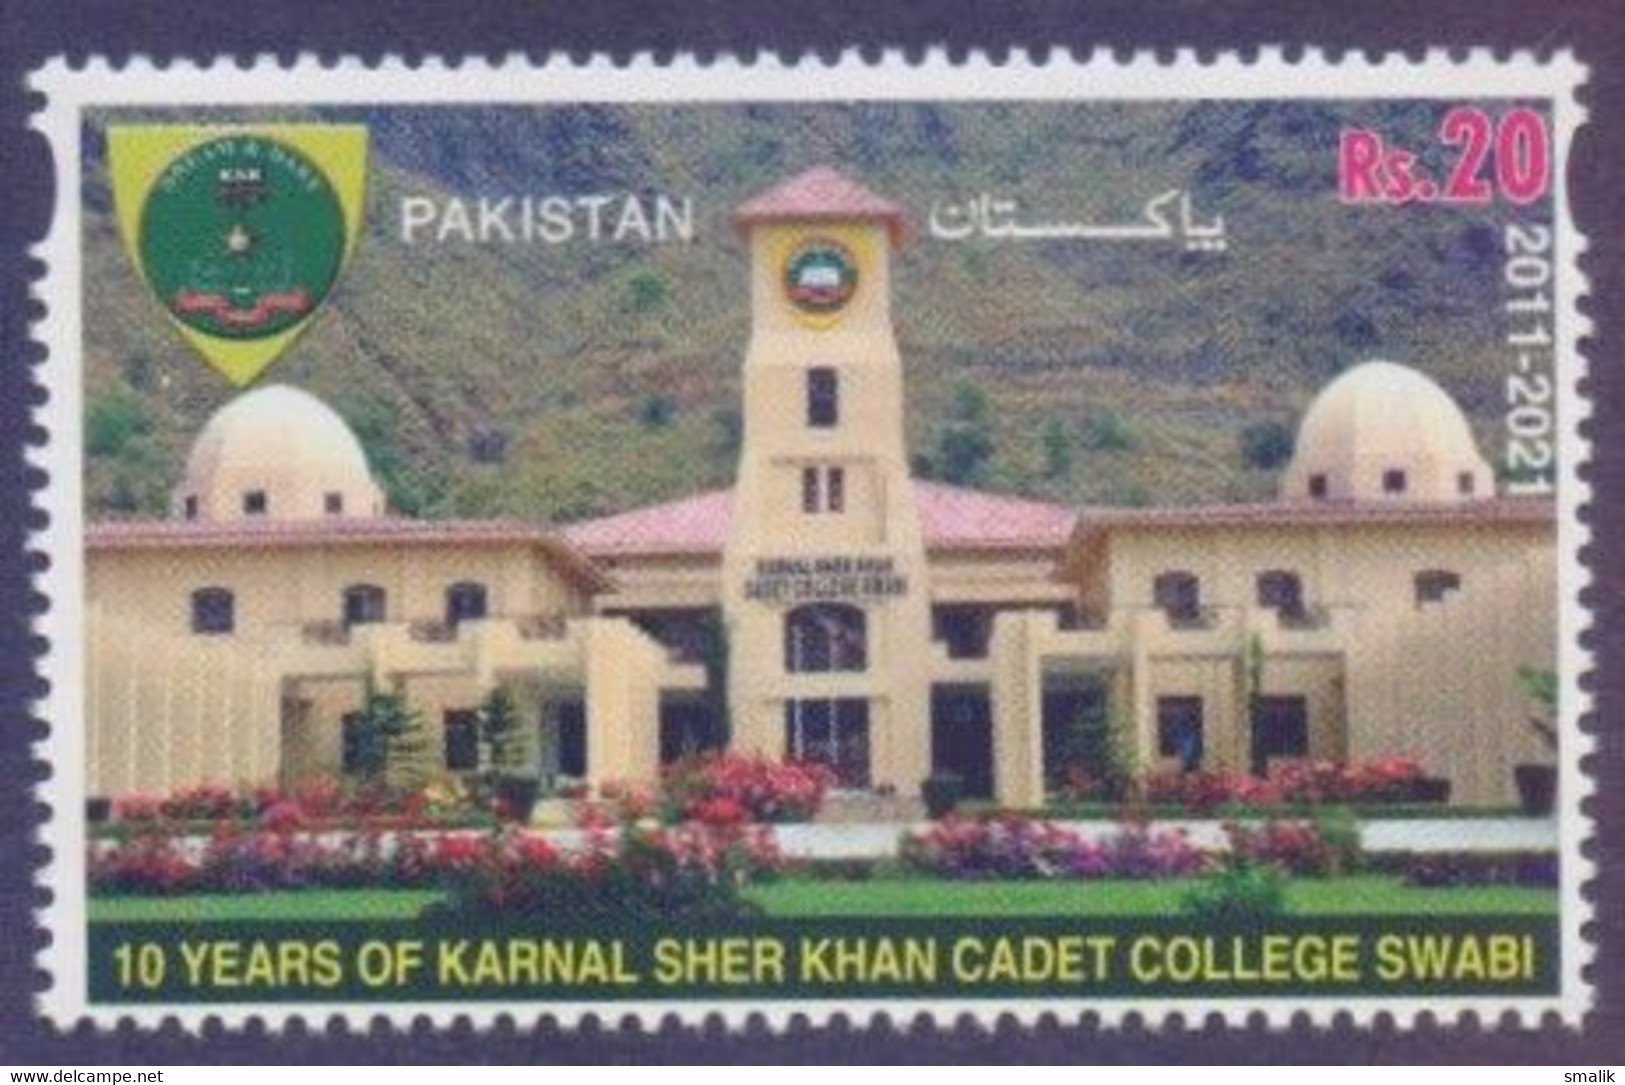 PAKISTAN 2021 - 10 Years Of Karnal Sher Khan Cadet College SWABI, 1v. MNH - Pakistan